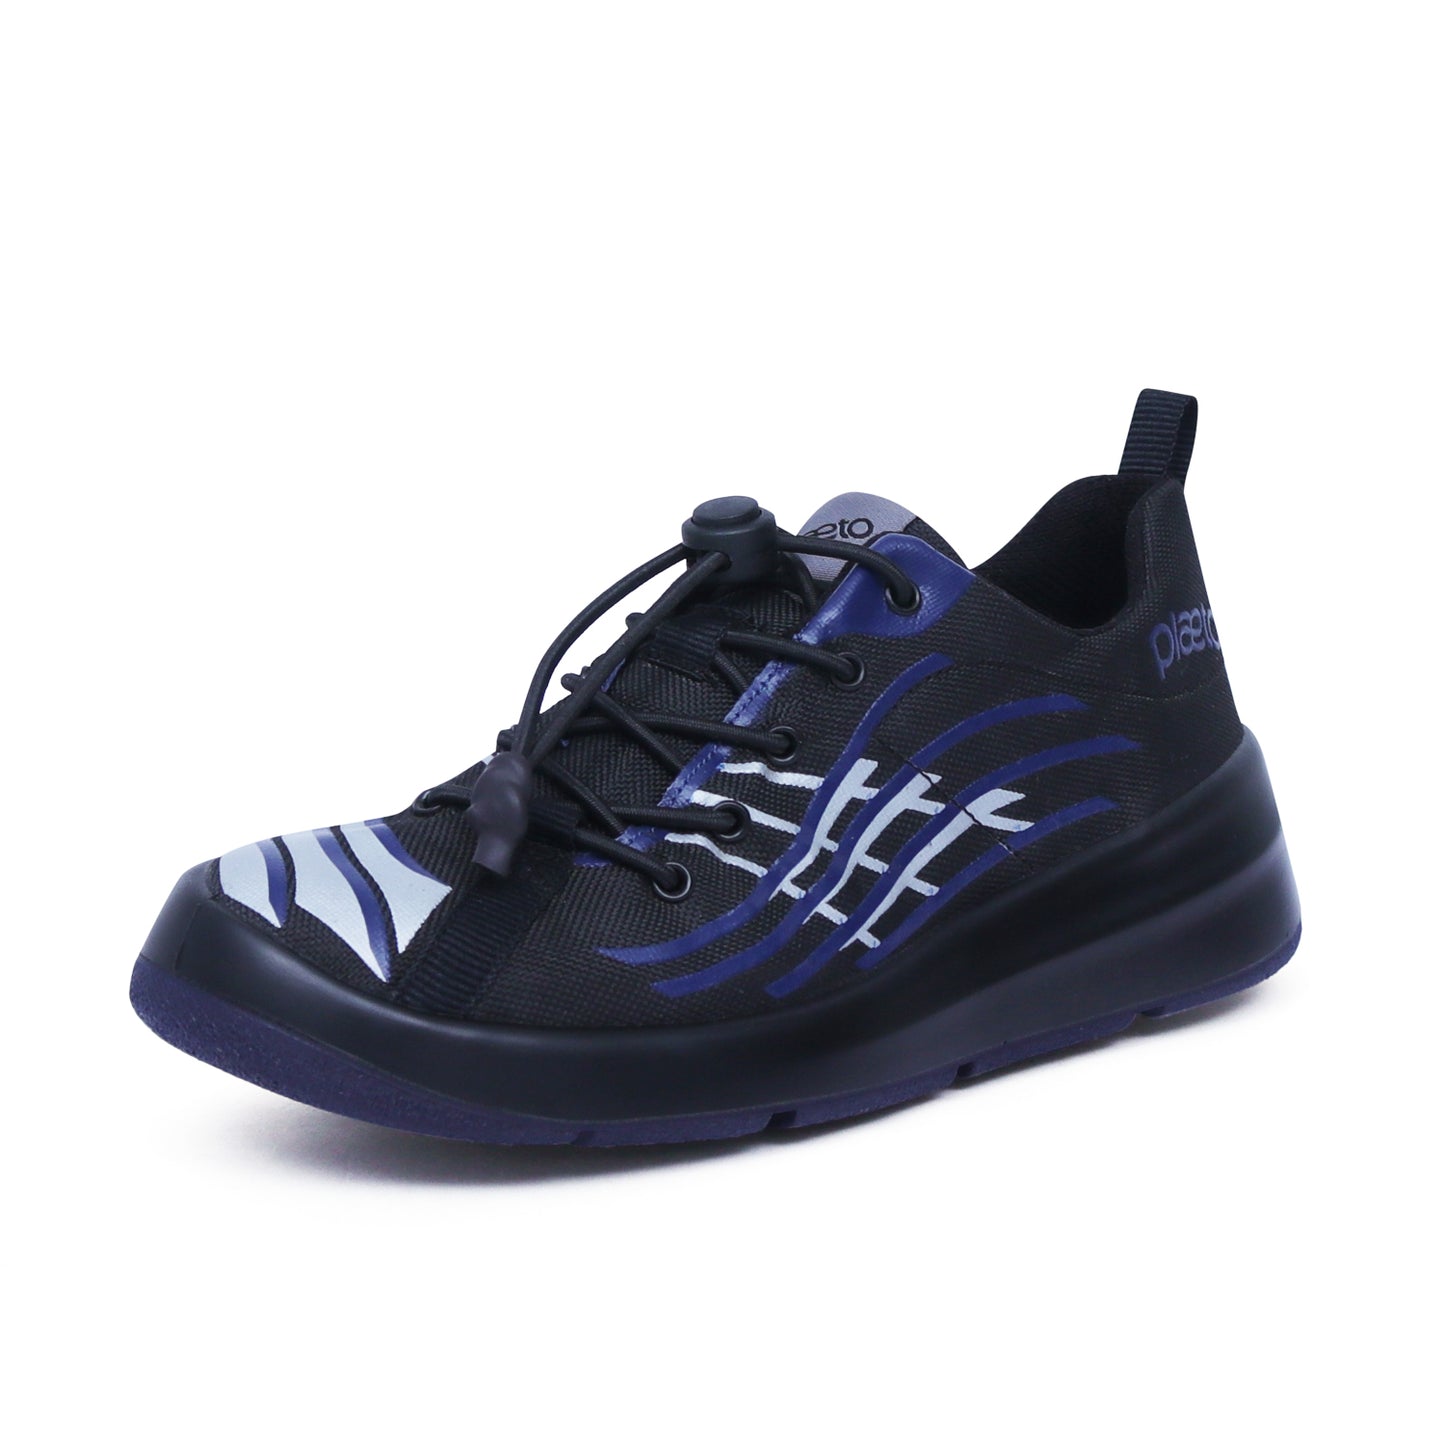 Nova Kids Multiplay Sports Shoes - Black / Navy Blue